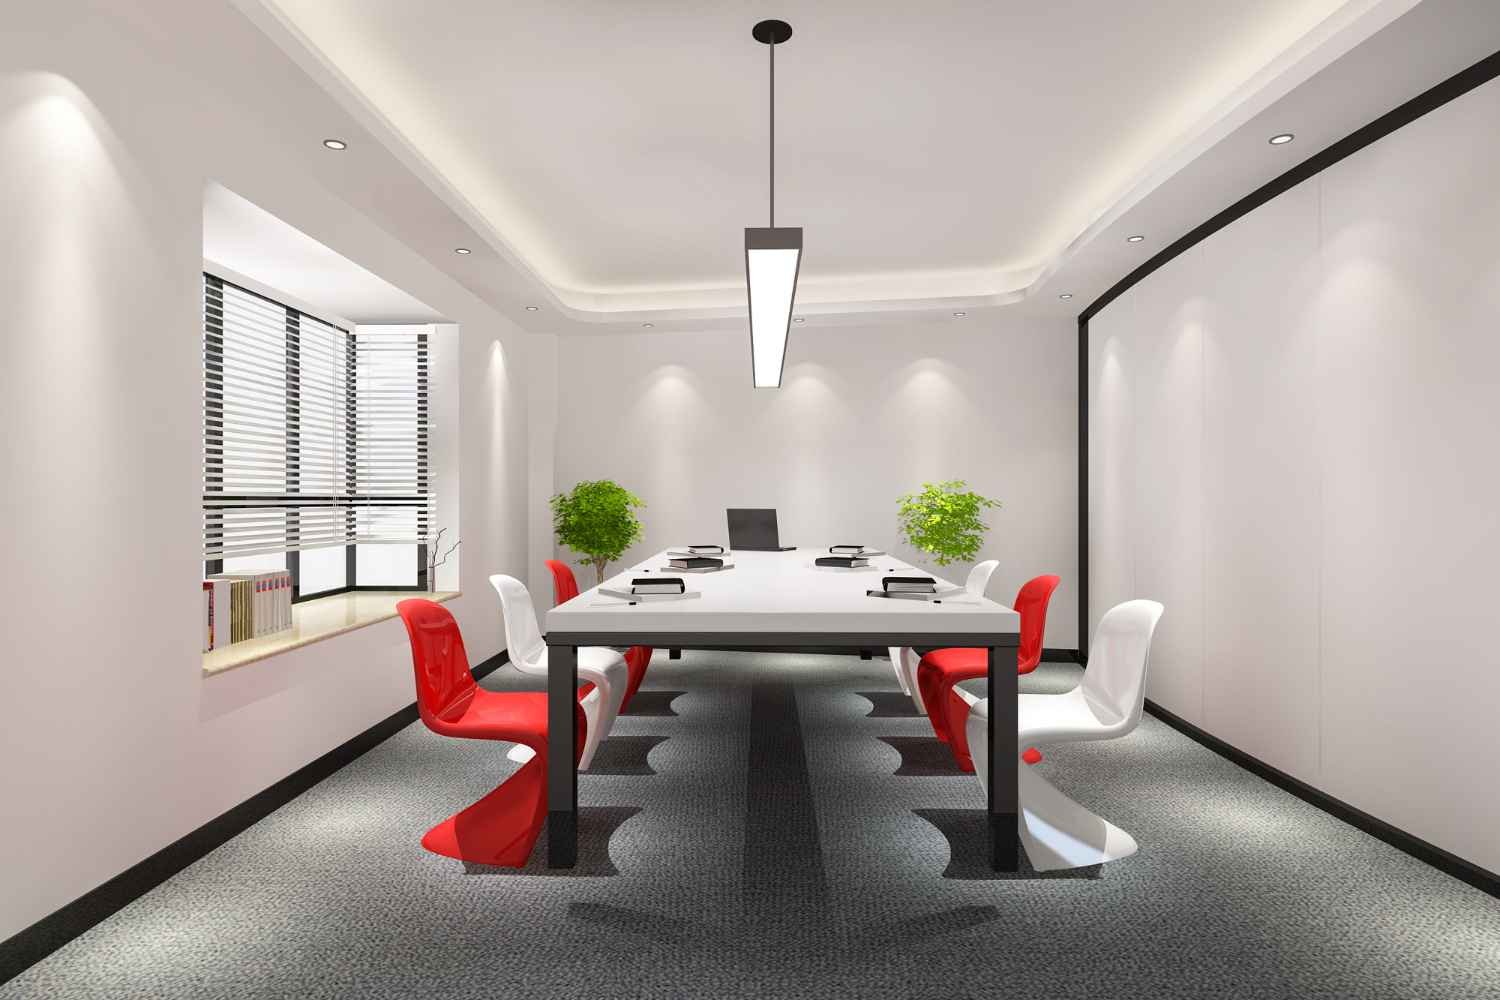 New Startup Office’s Interior Design